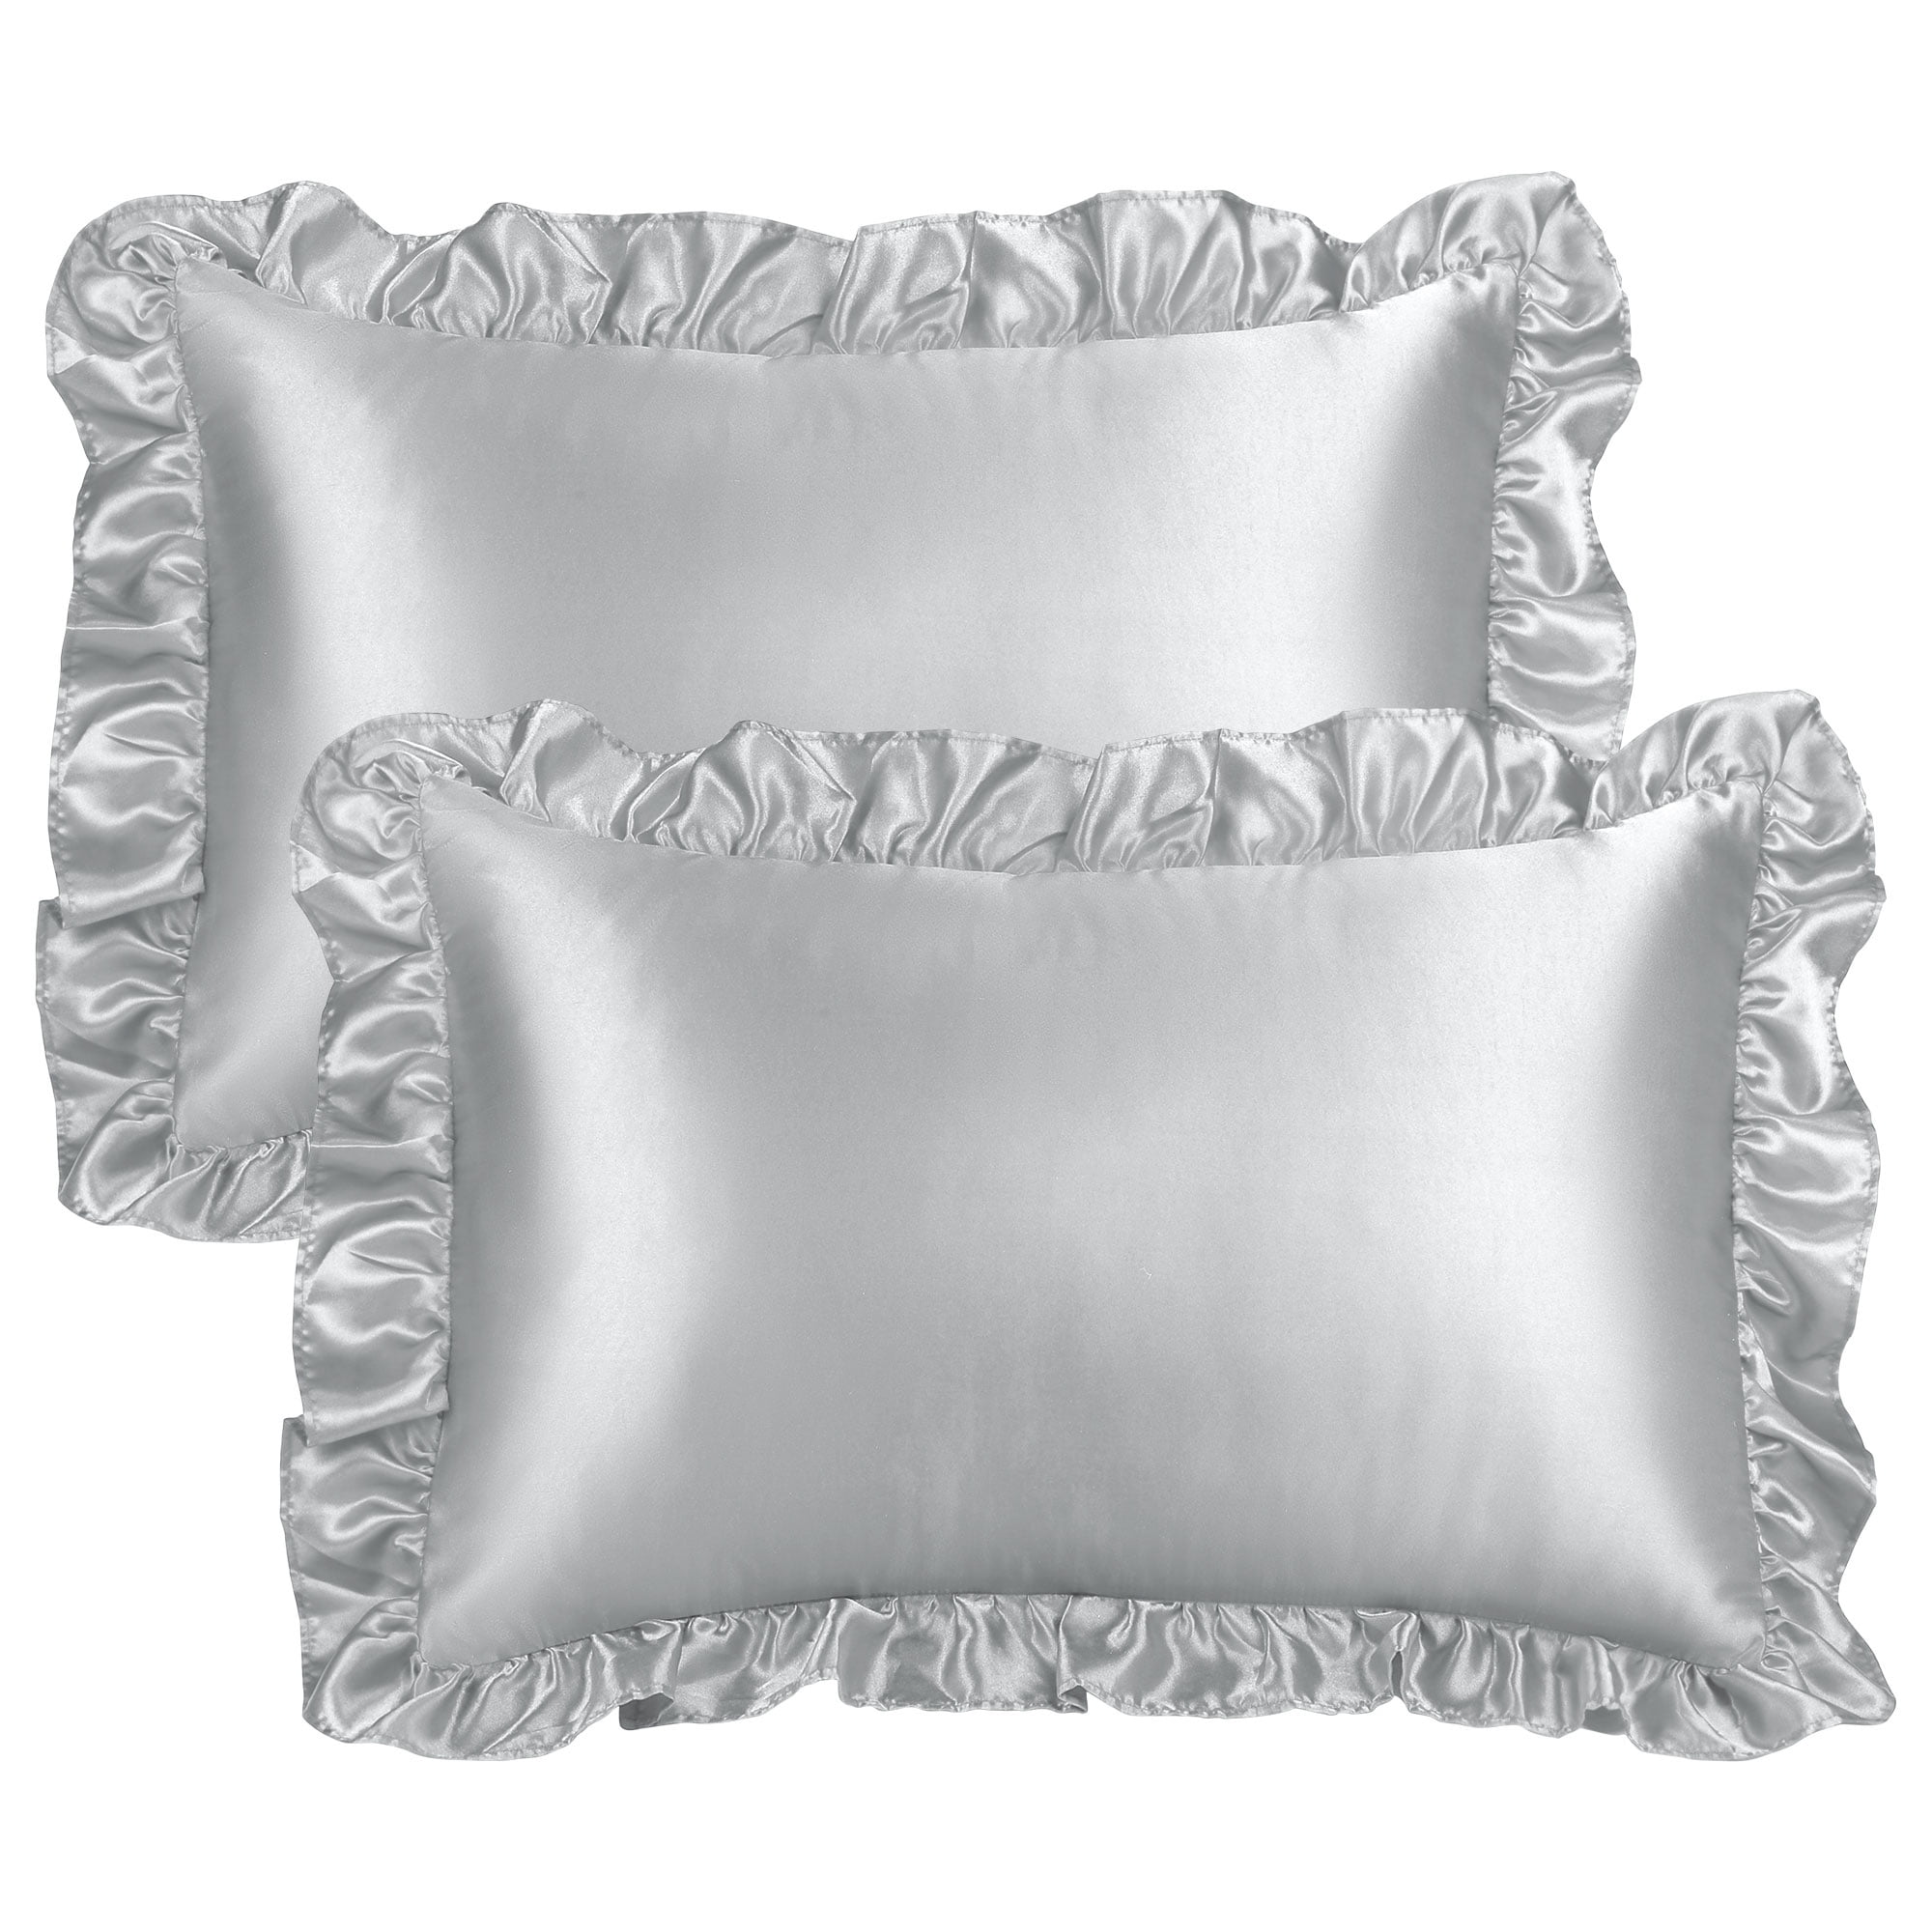 Details about   Cotton White Pillowcases LUXURIOUS QUALITY 600 Tc Set of 2 Pillow Cases 